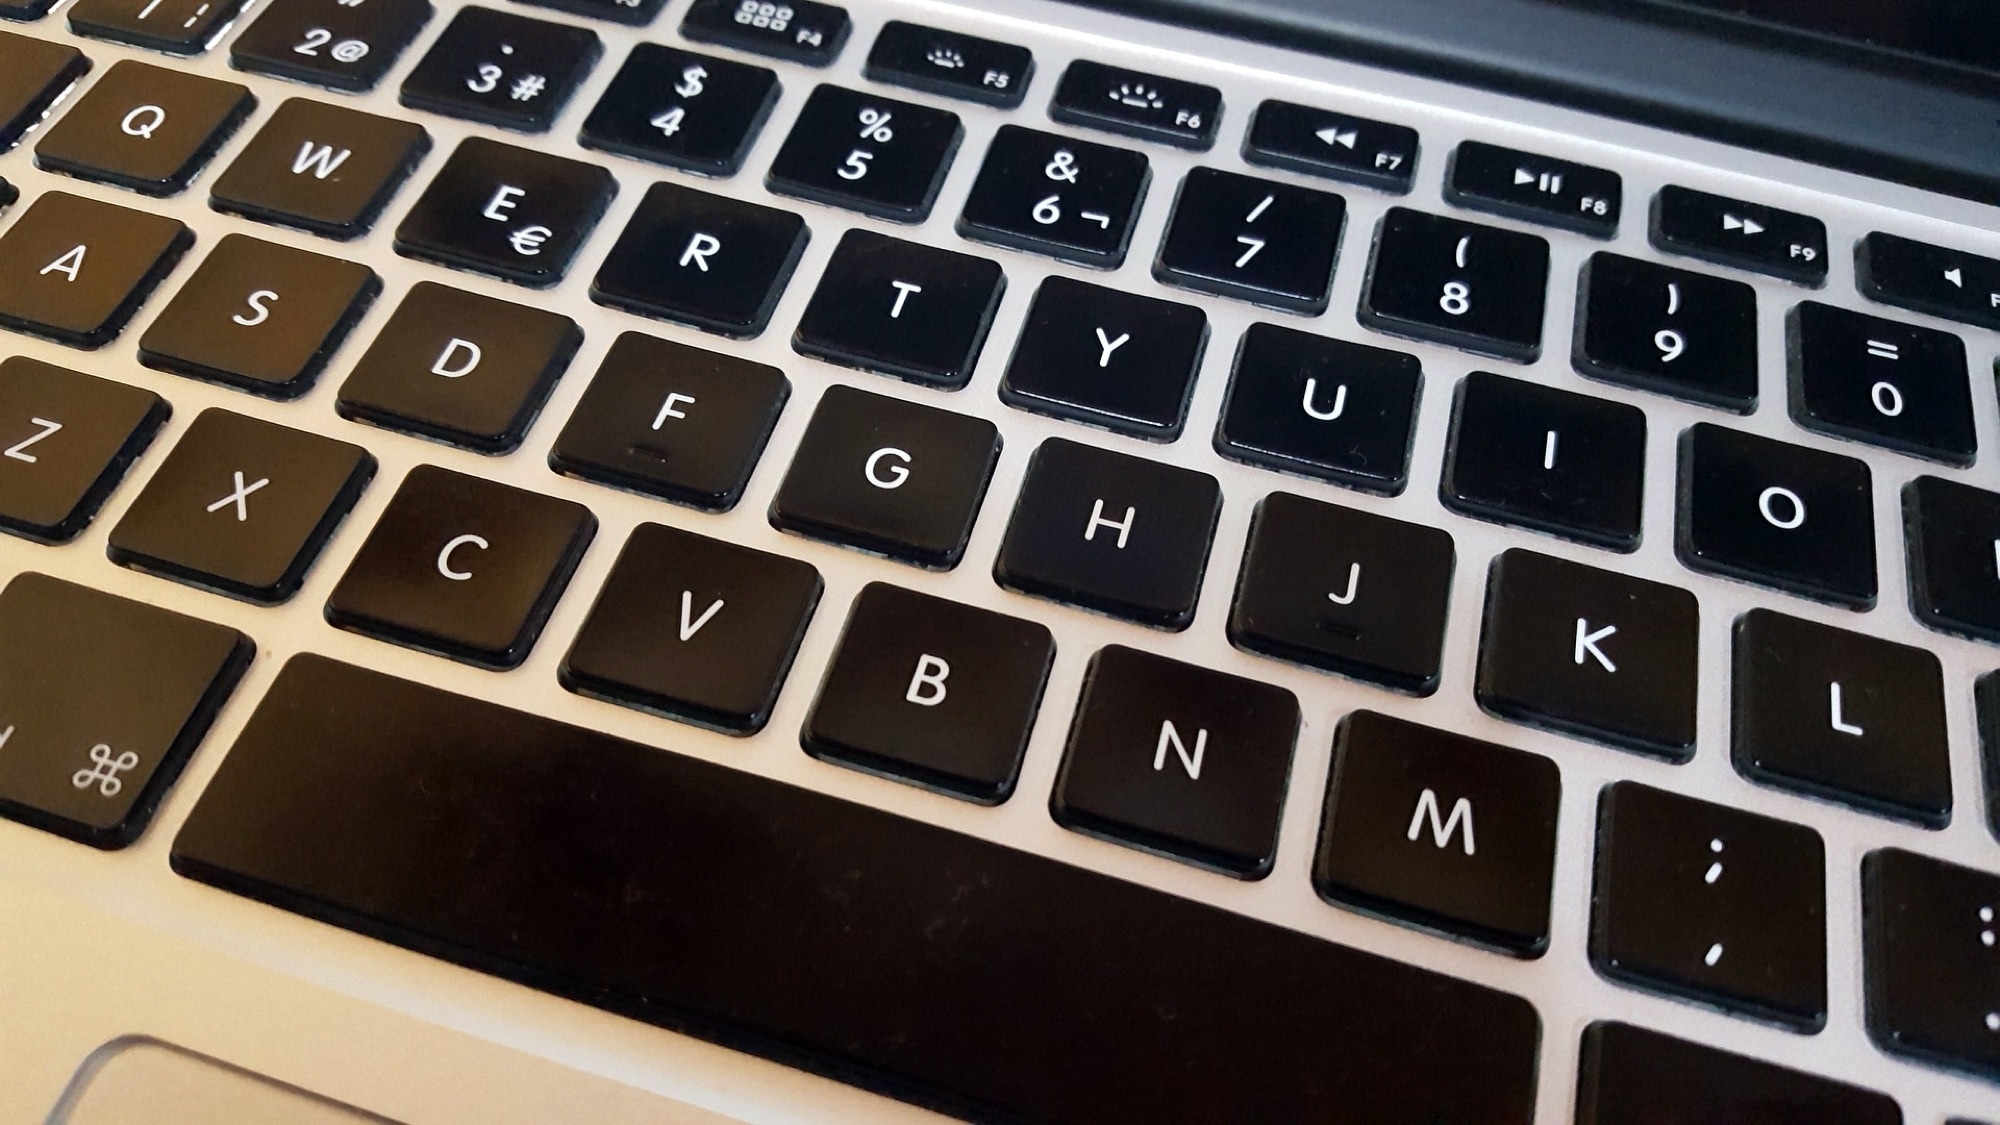 MacBook keyboard - Outlook keyboard shortcuts